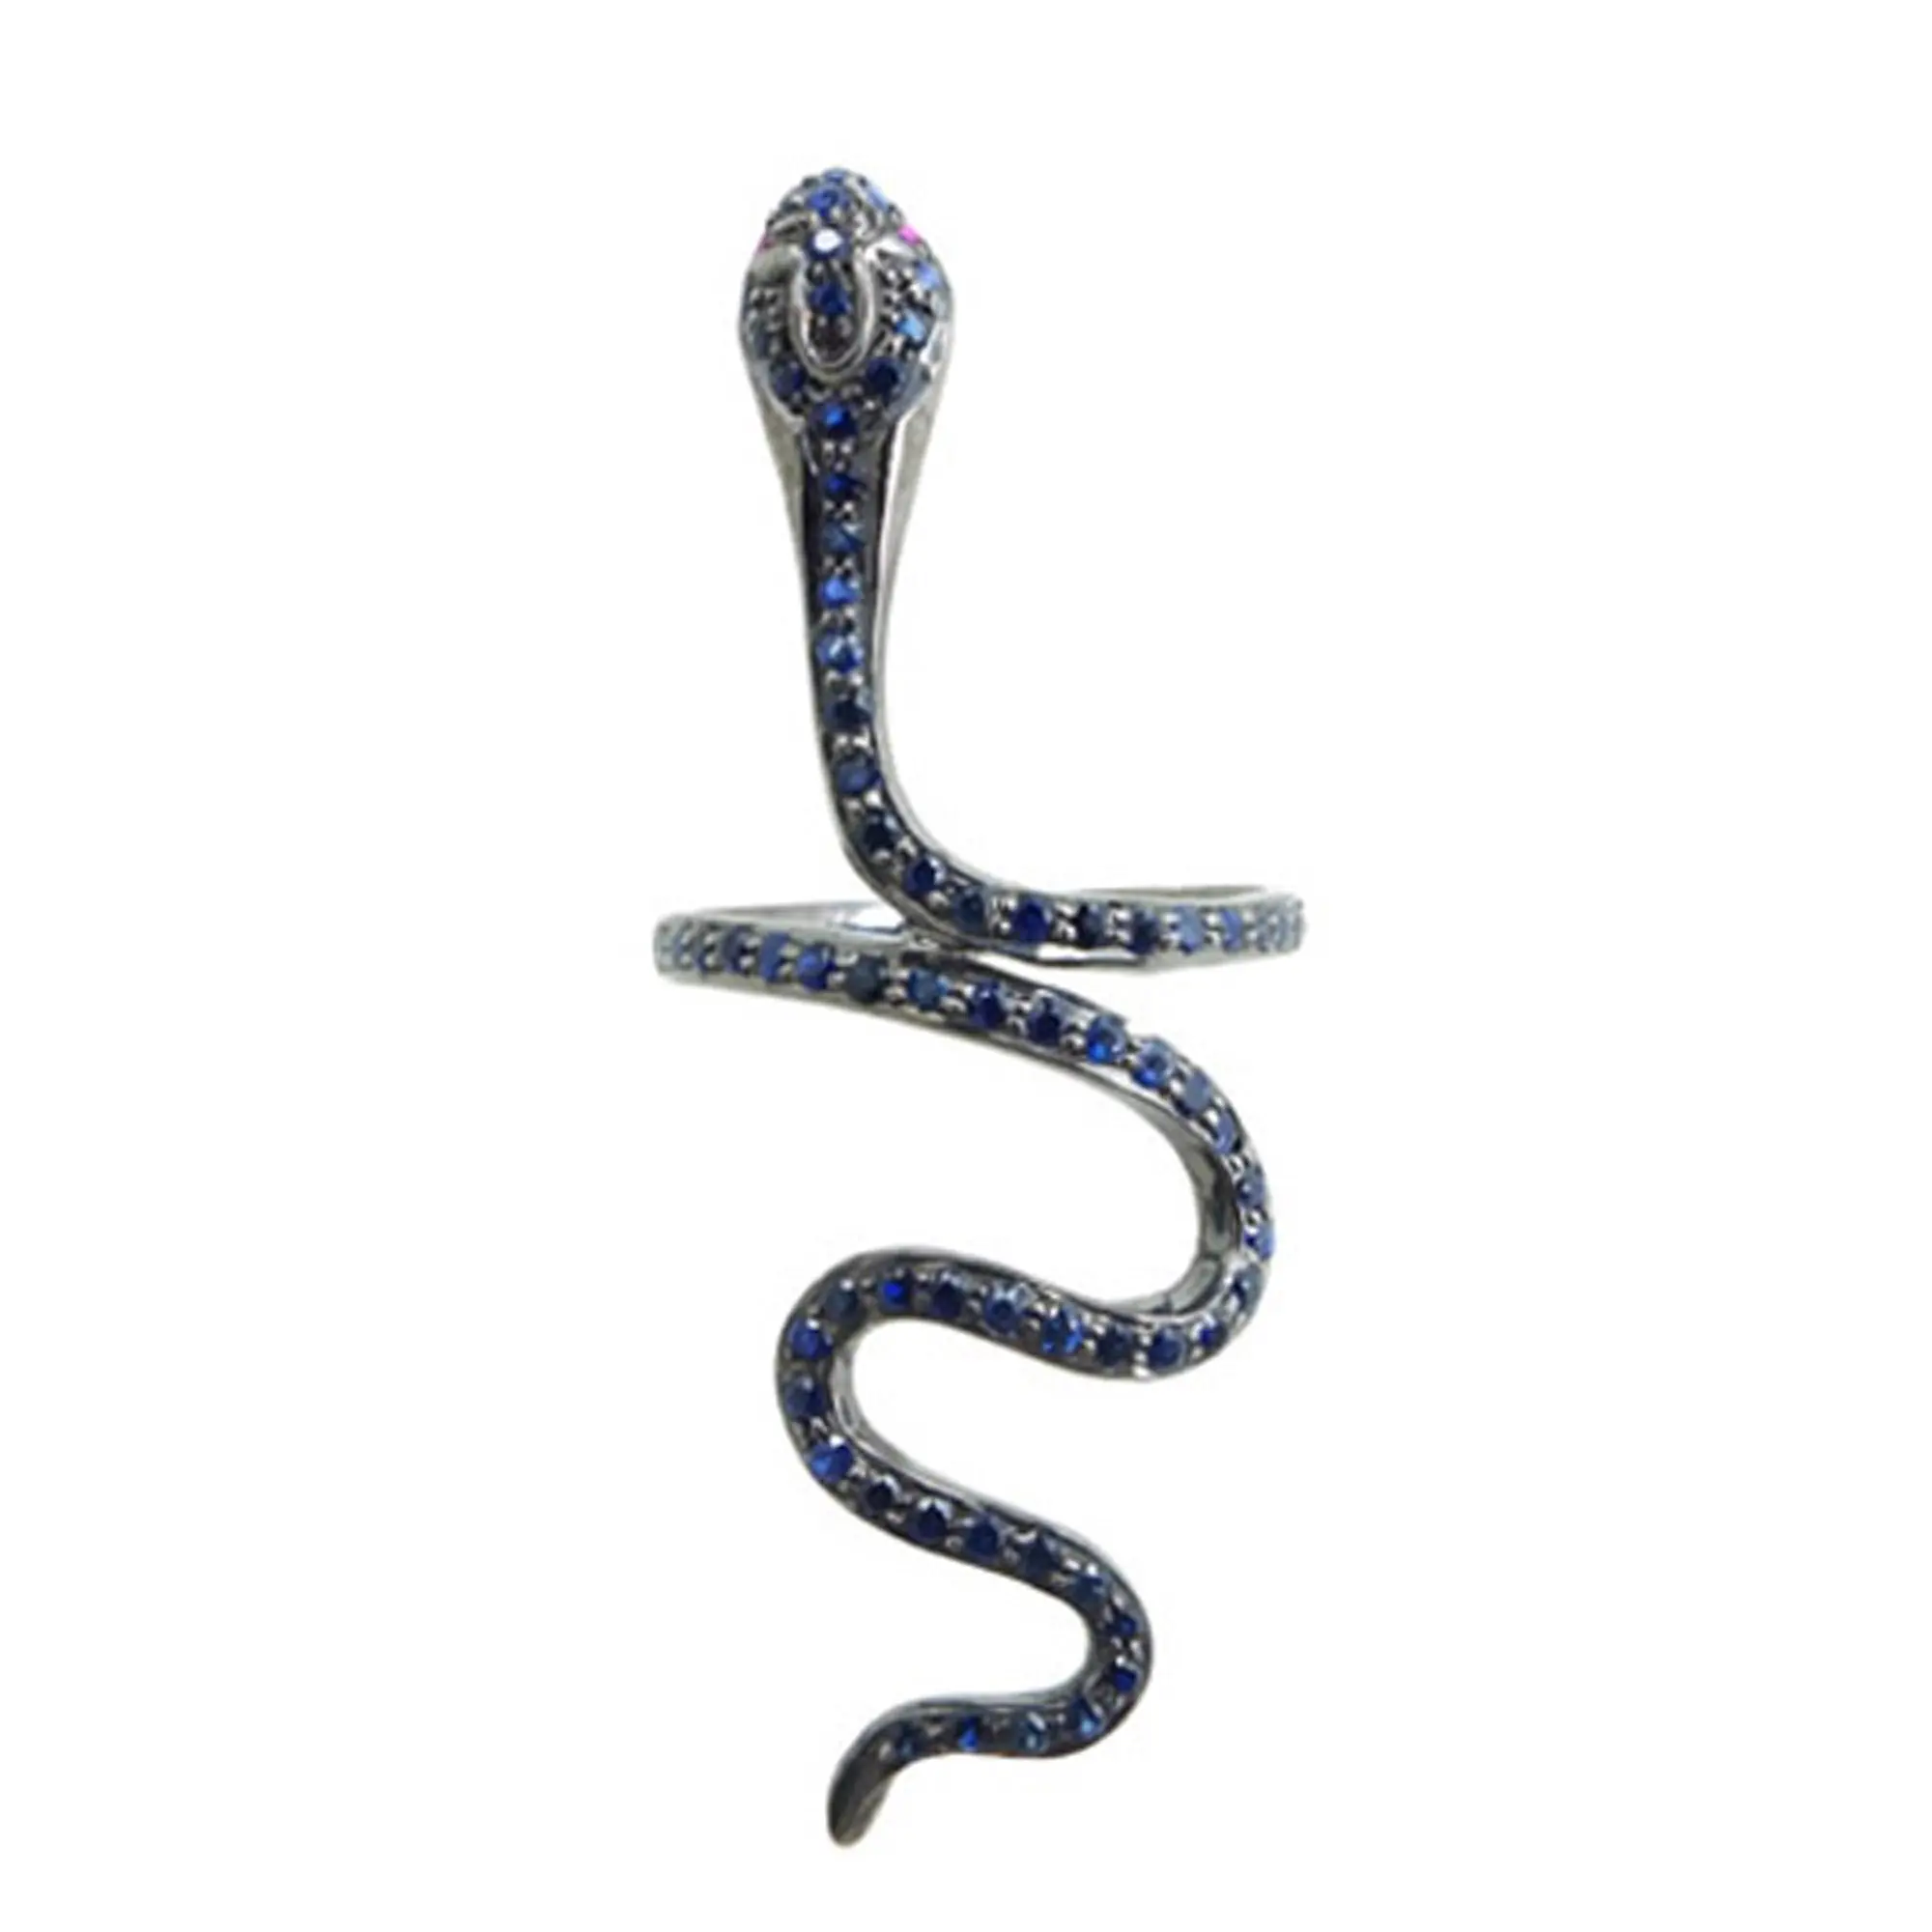 Perhiasan hewan batu permata 925 perak murni mata Rubi cincin ular safir biru pemakaian harian perhiasan bagus untuk produsen anak perempuan